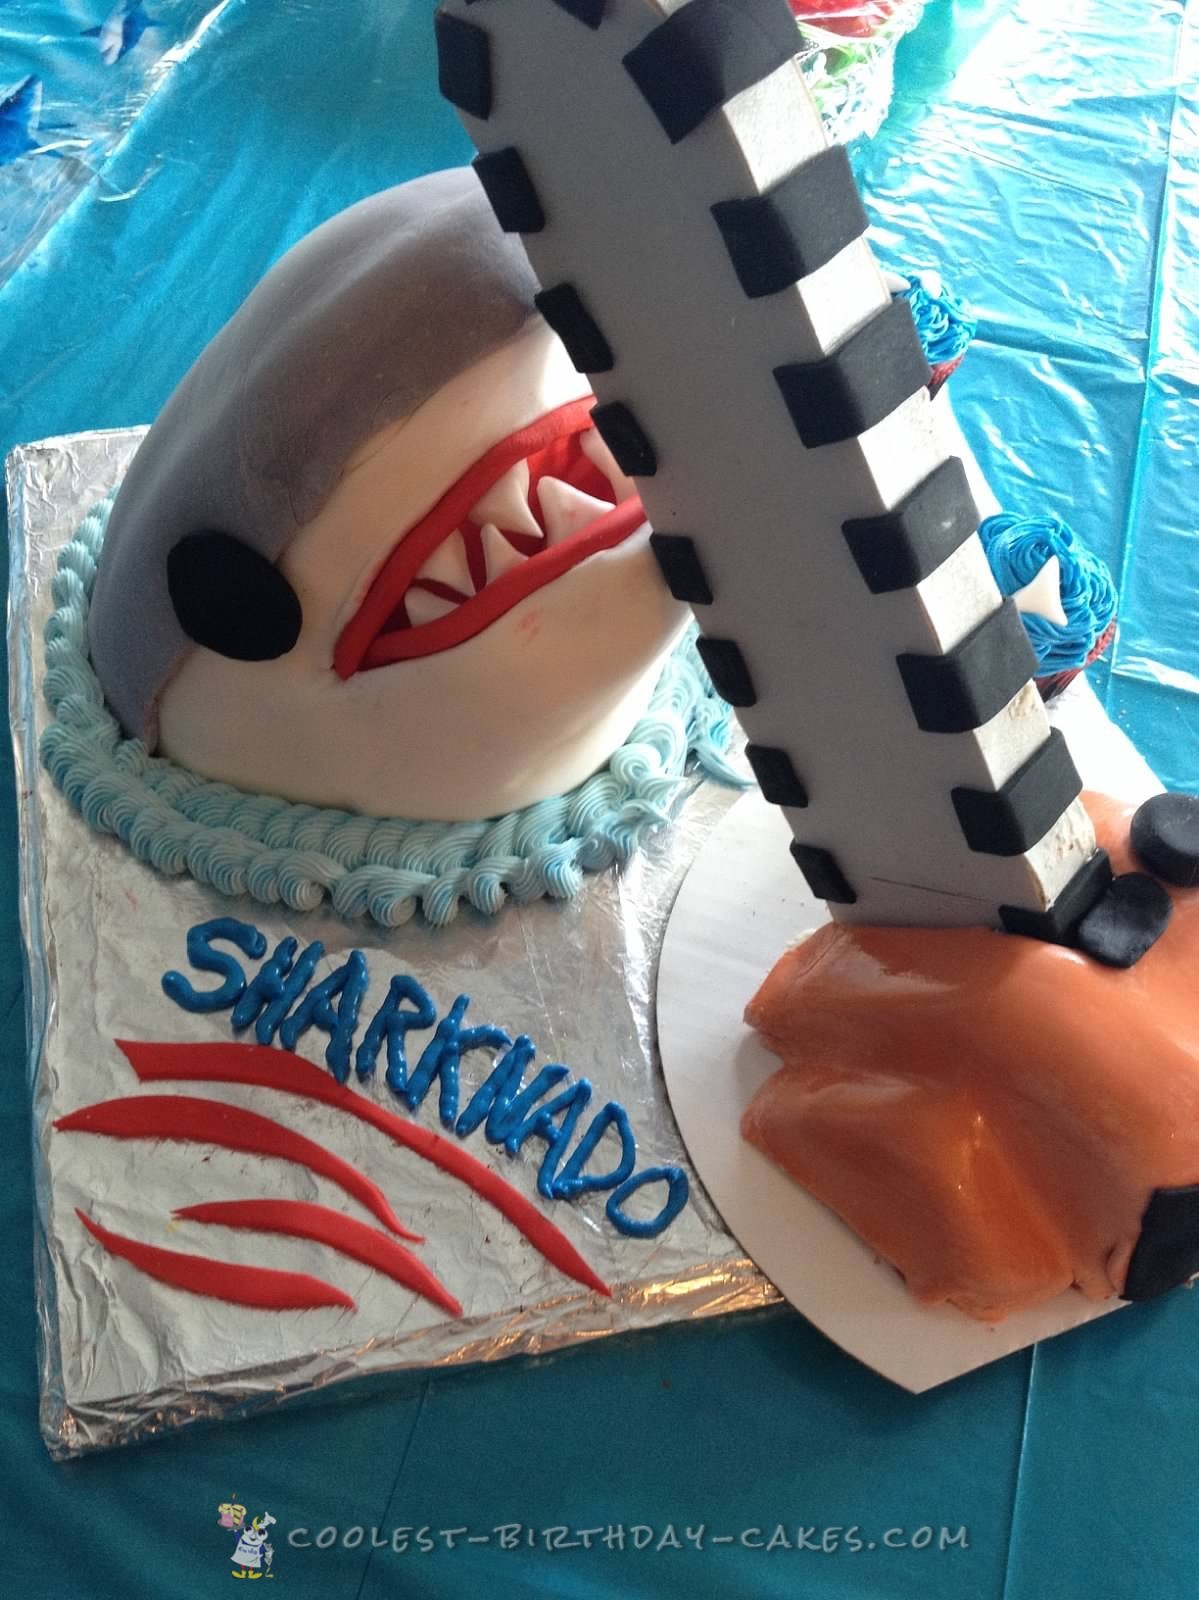 Sharknado cake!